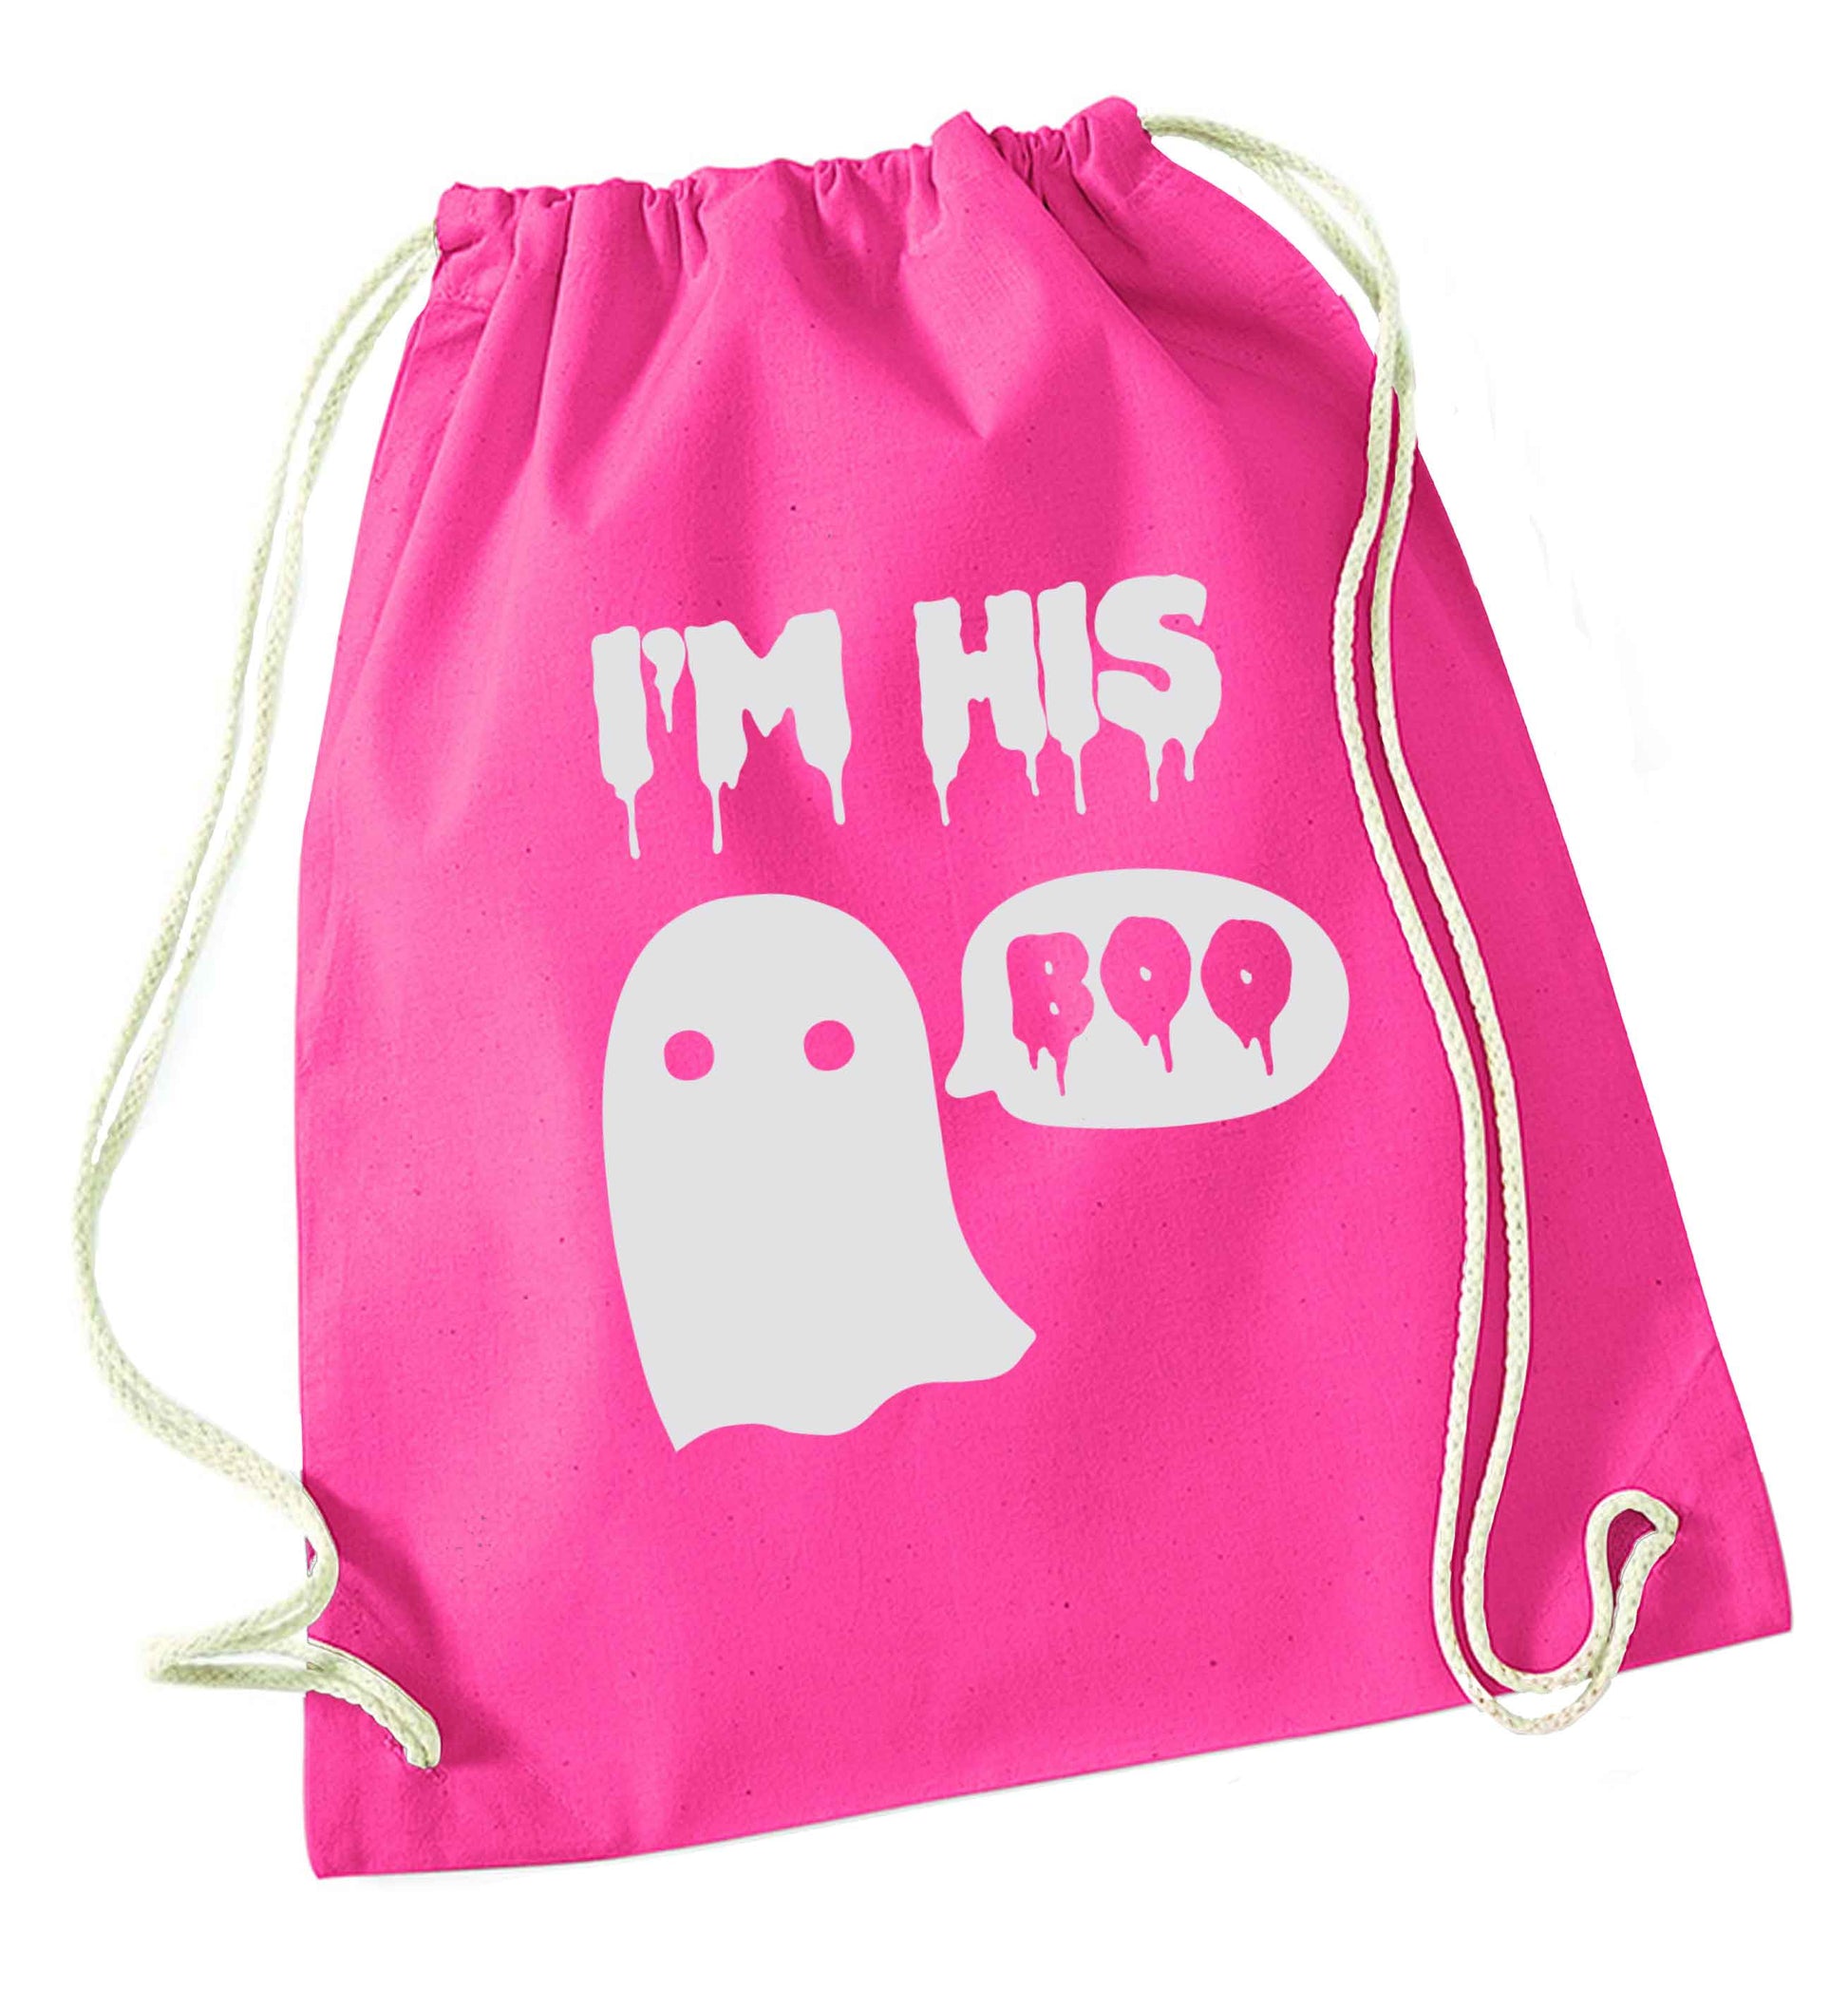 I'm his boo pink drawstring bag